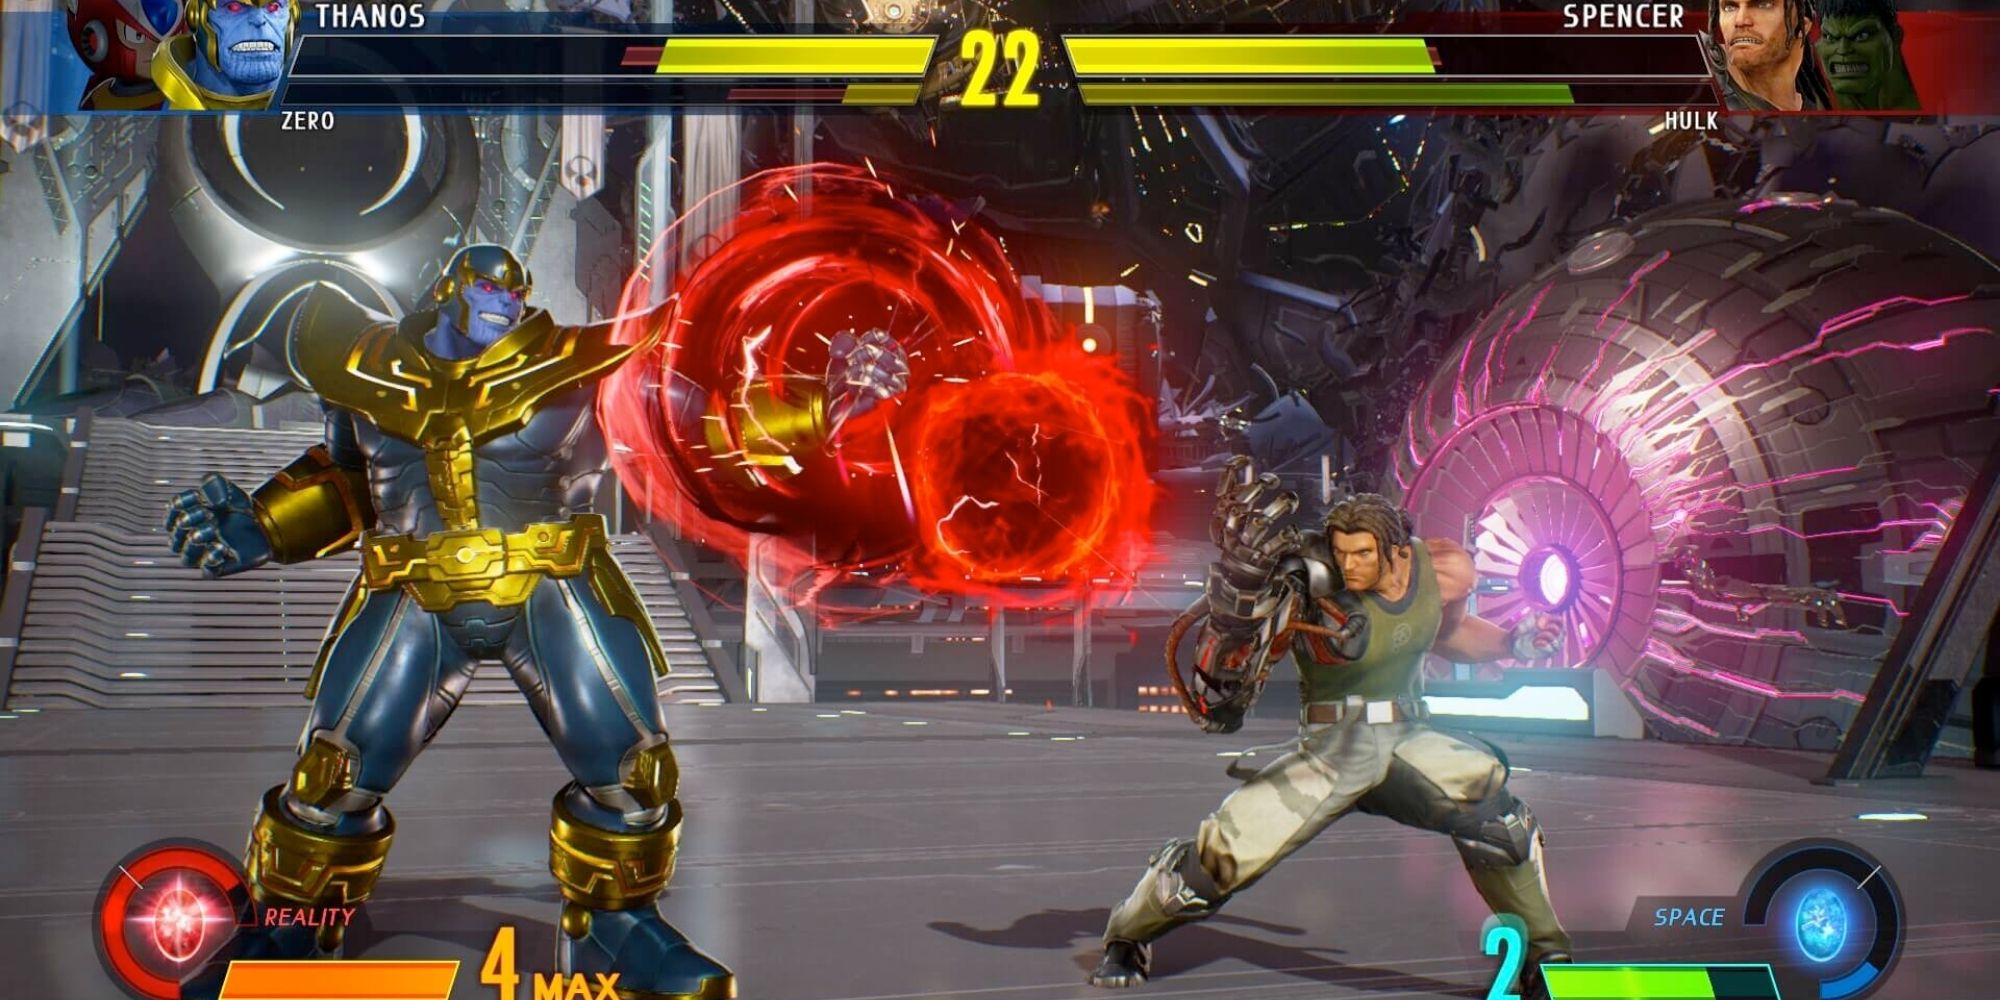 Thanos fires a blast at Winter Soldier in Marvel vs Capcom Infinite 